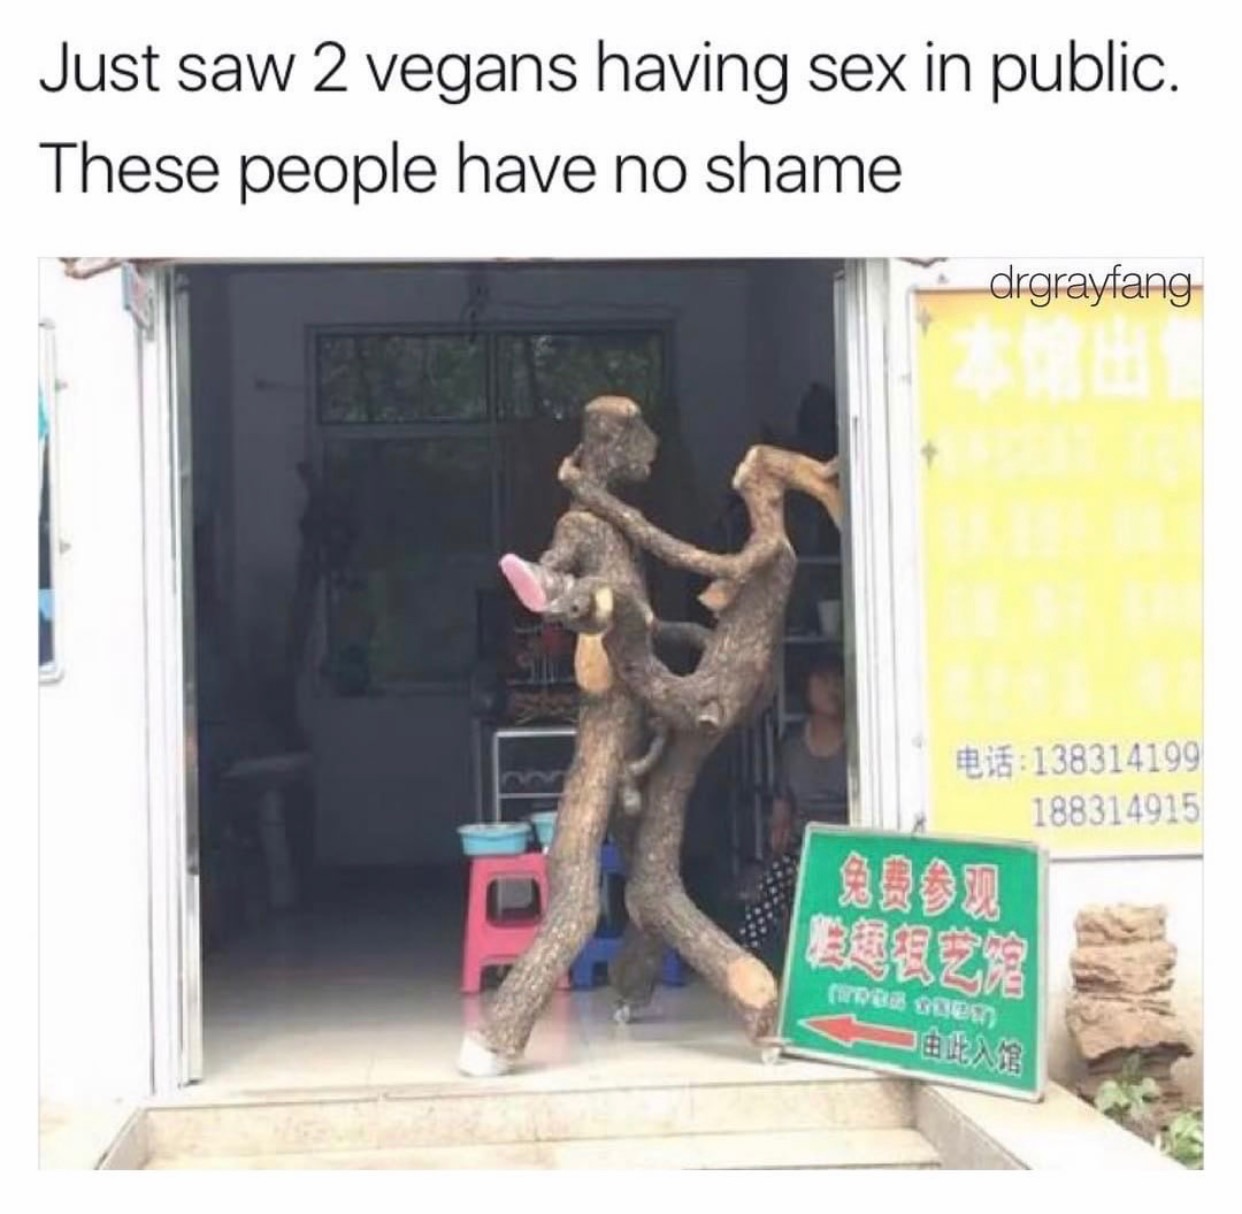 vegan sex meme - | Just saw 2vegans having sex in public. These people have no shame drgrayfang 138314100 188314915 Rb moes